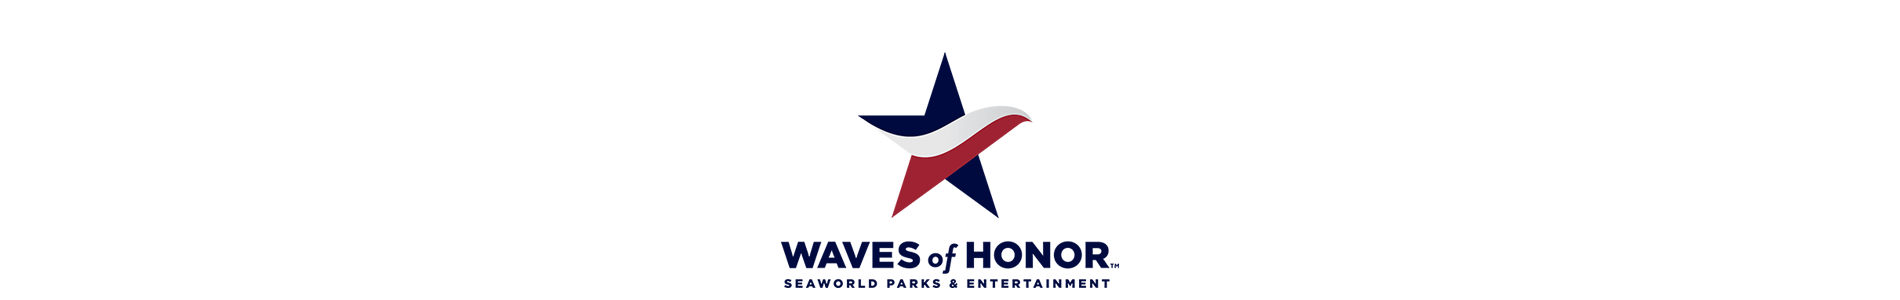 Waves of Honor Logo Banner